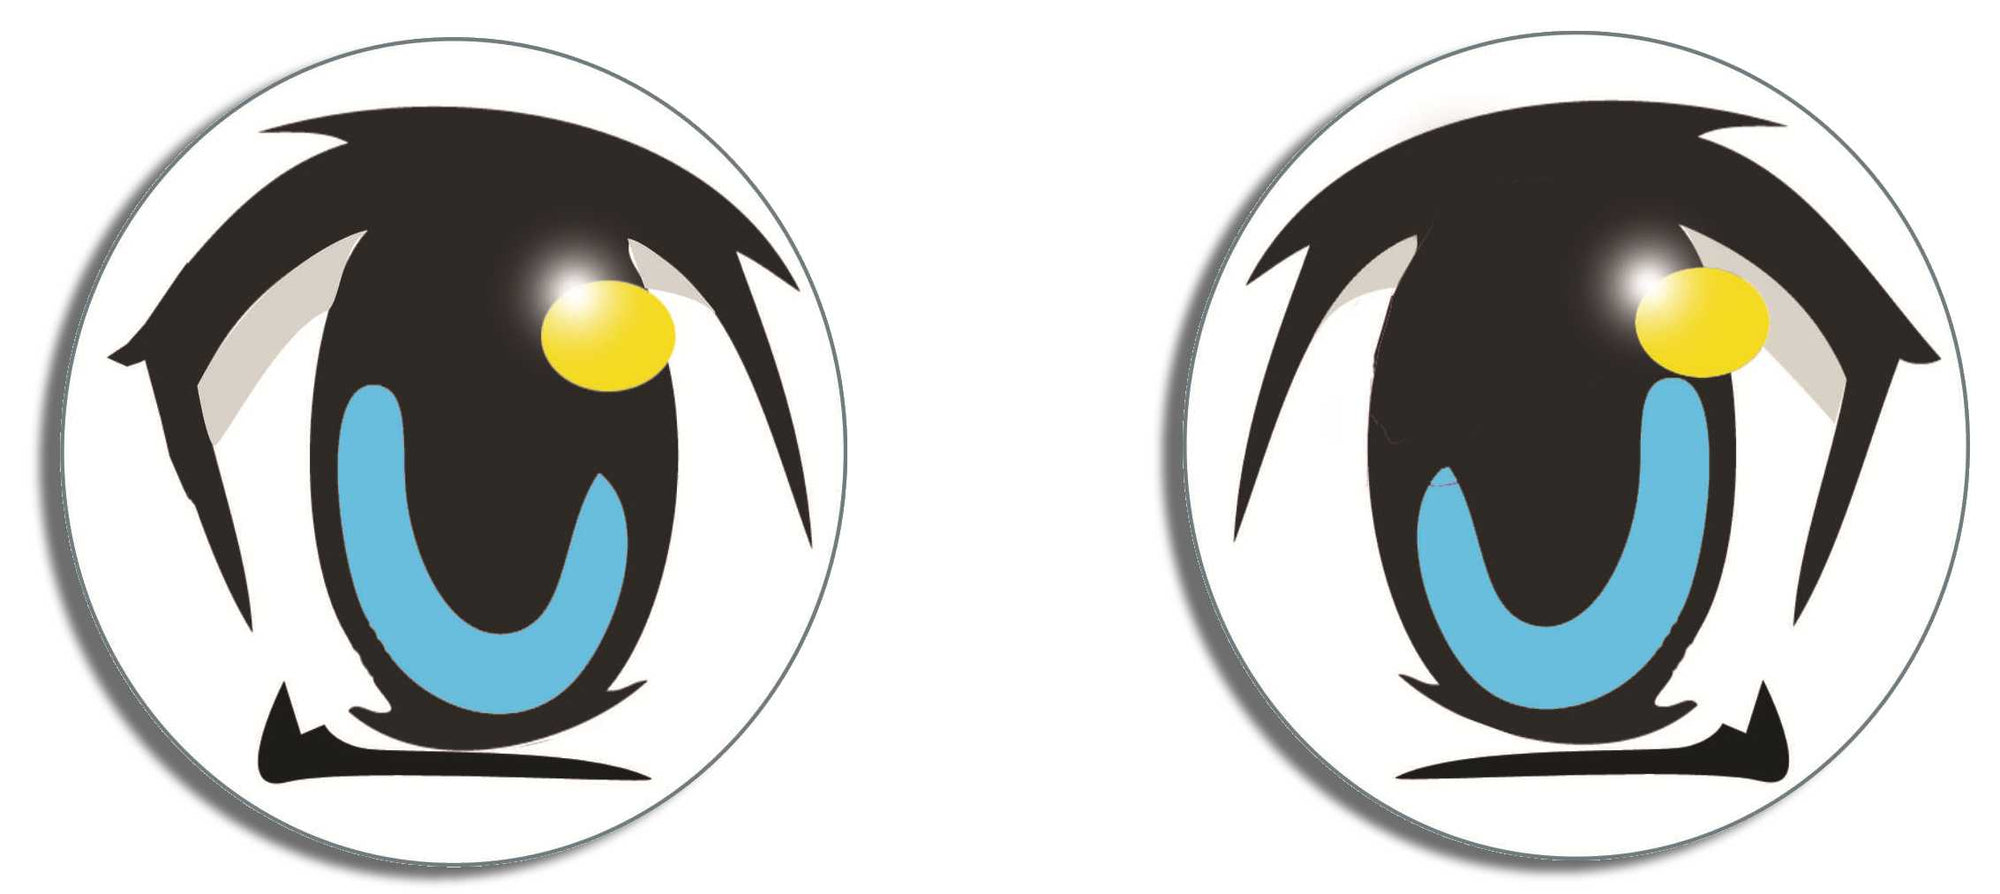 Anime eyes #5 size: 3.75"H  Bumper Sticker-s -  Decal Bumper Sticker-cool Bumper Sticker Car Magnet Anime eyes-  Decal for carsdigimon, dragon ball, manga, pokemon